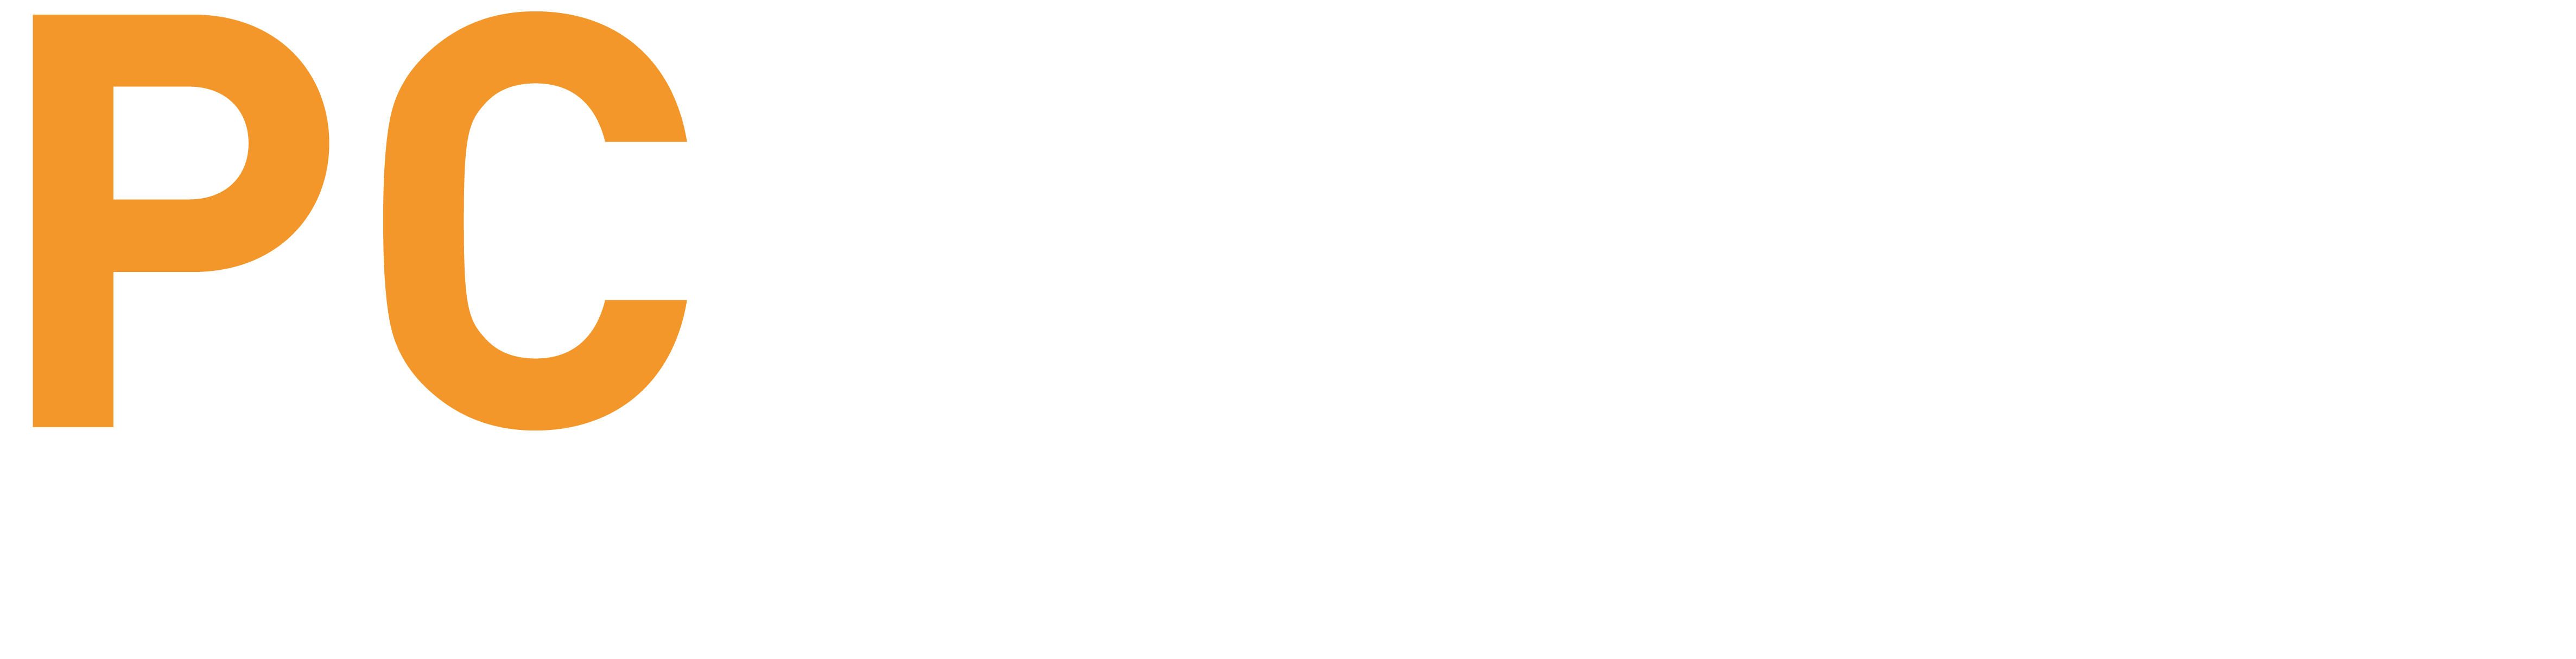 PCmover Pro Logo